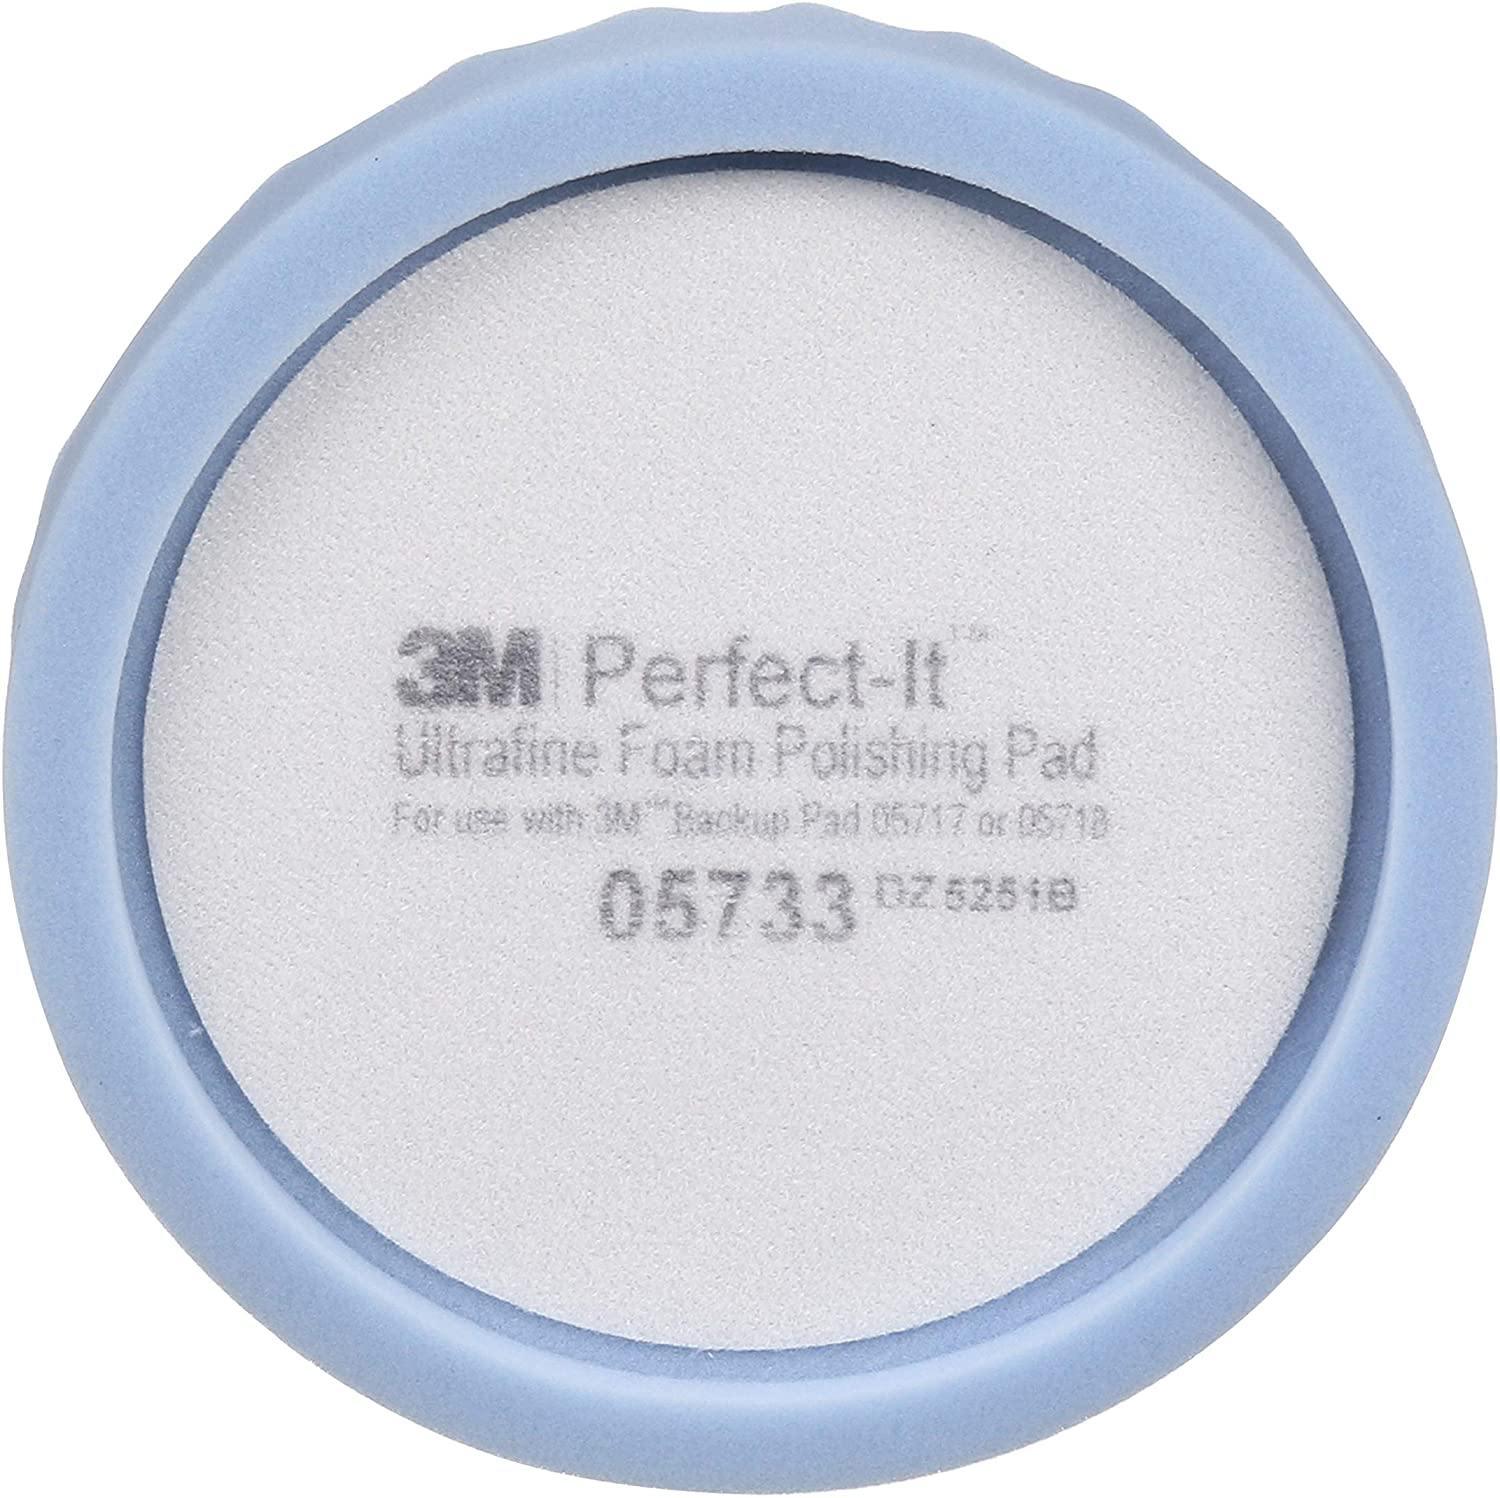 3M Perfect-It Ultrafine Polishing Pad,1 N-Car Accessories-dealsplant